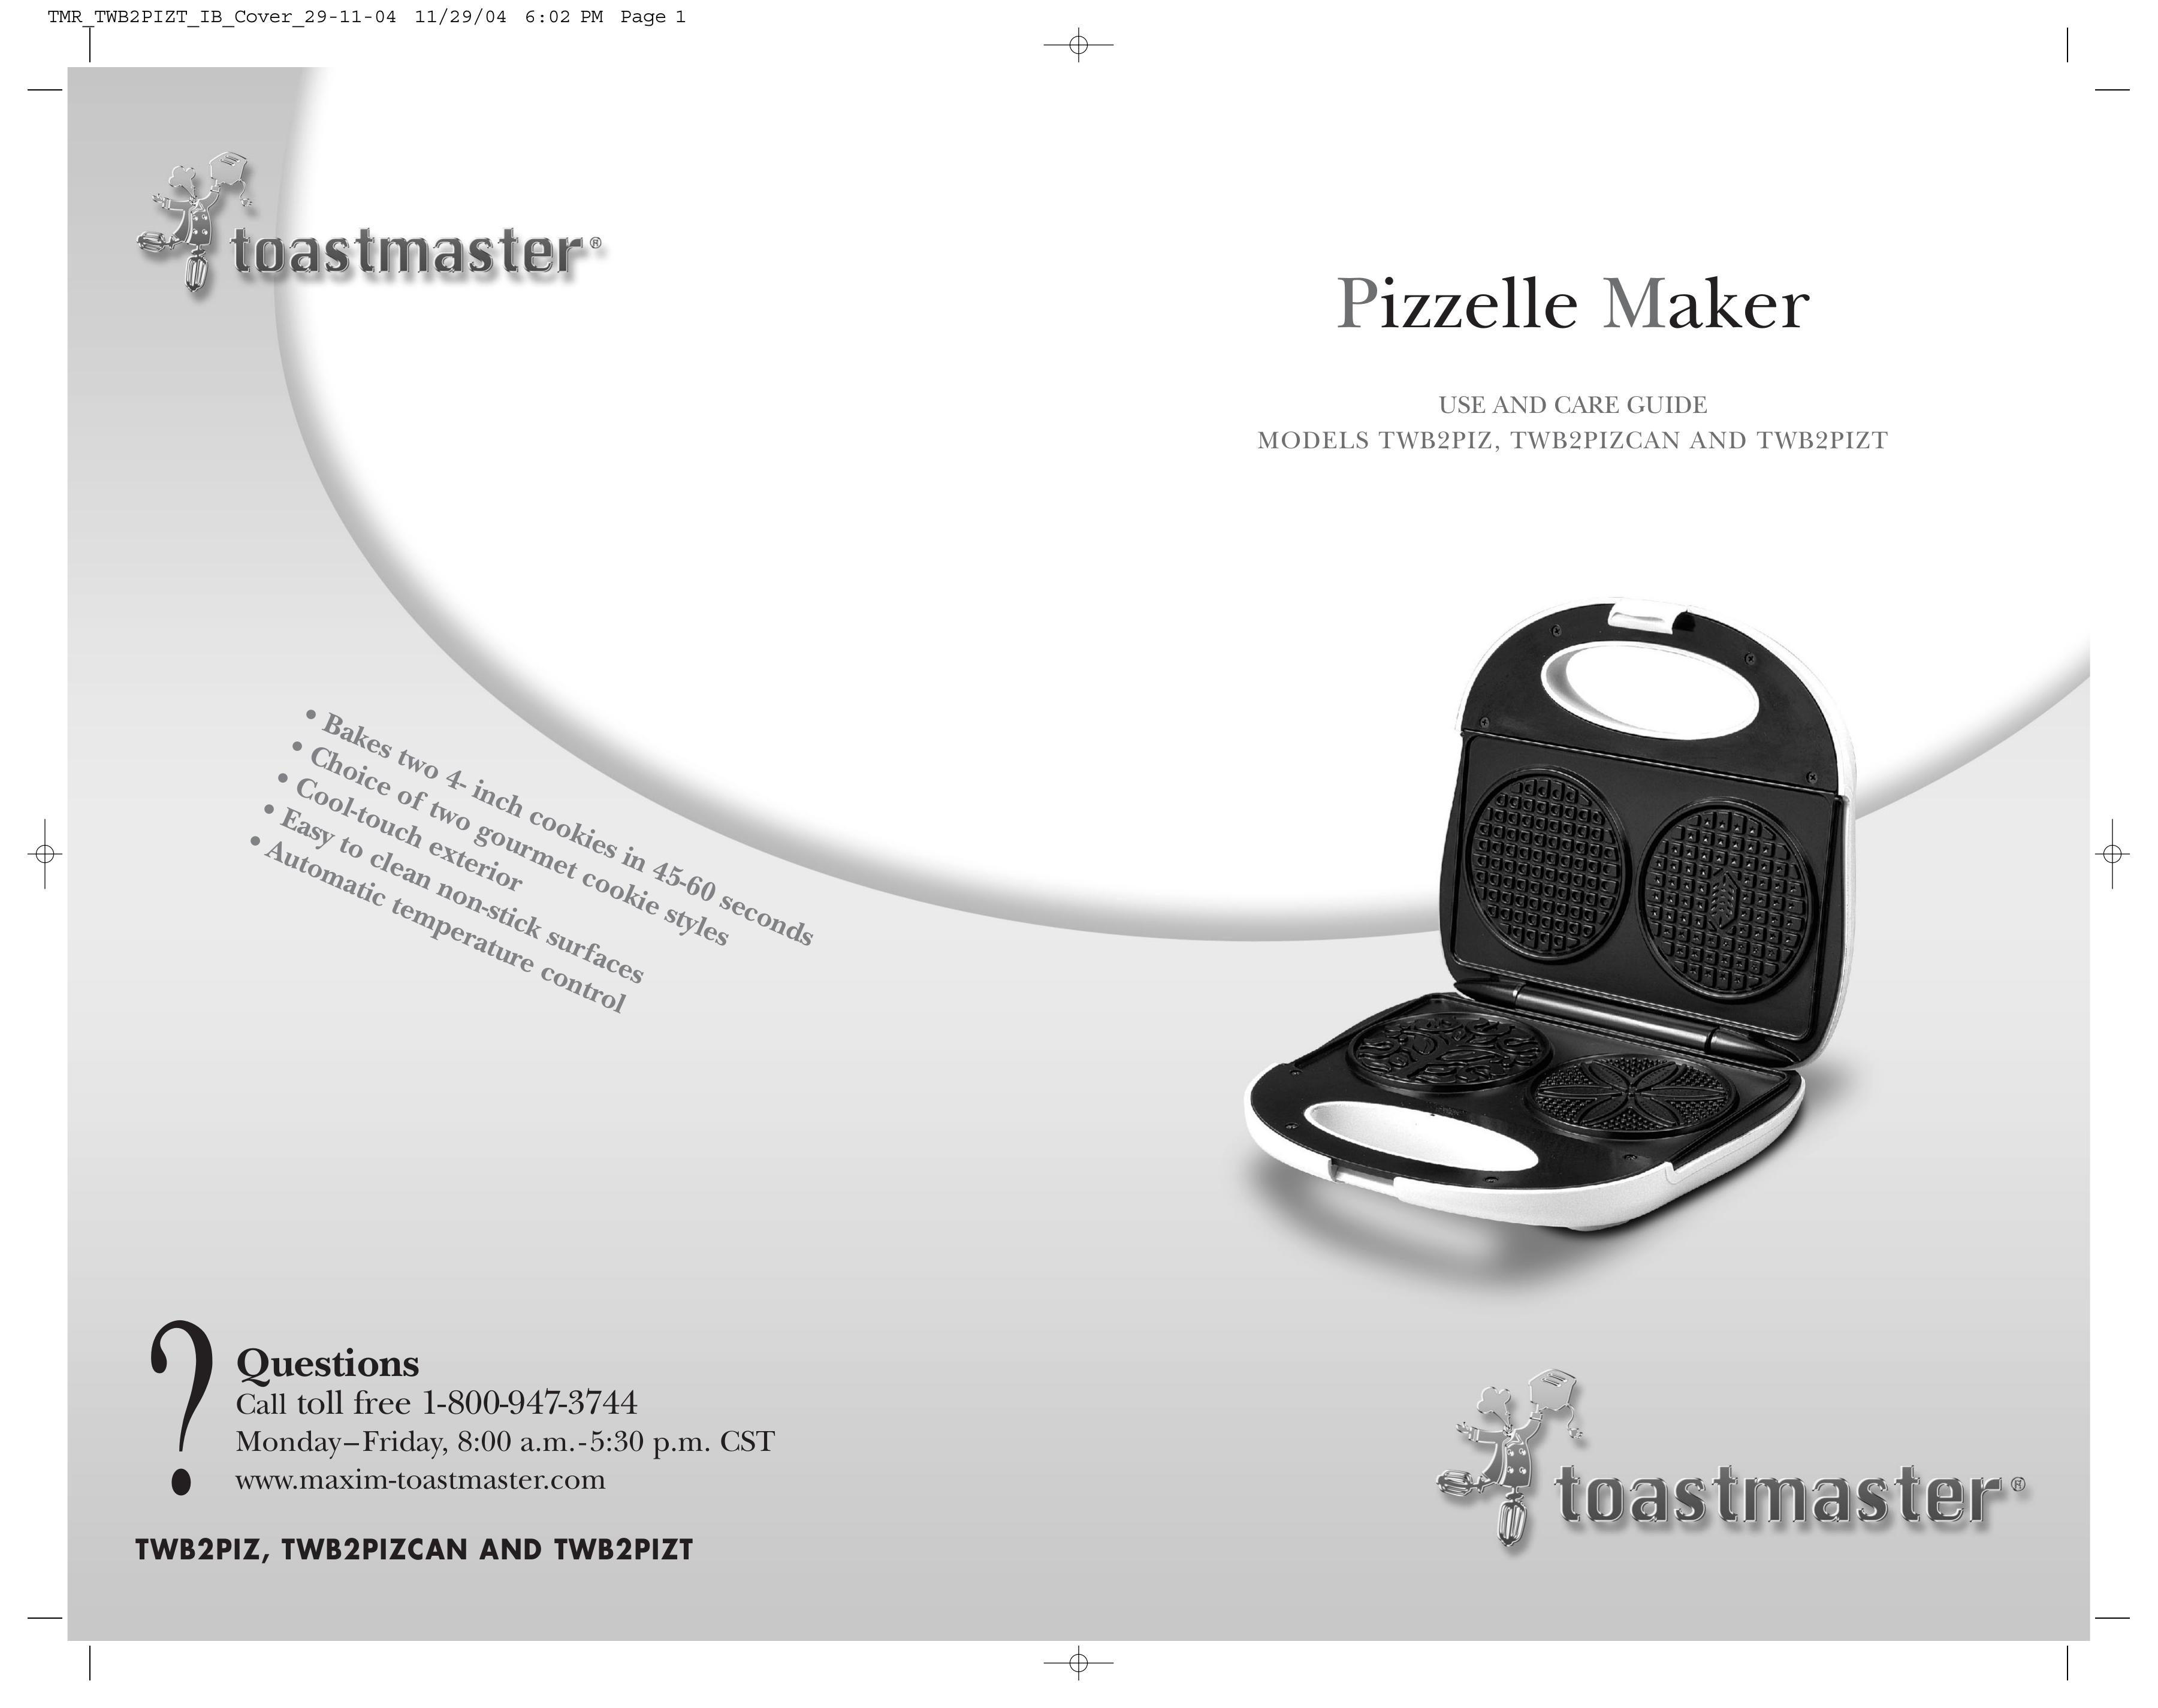 Toastmaster TWB2PIZCAN, TWB2PIZT Waffle Iron User Manual